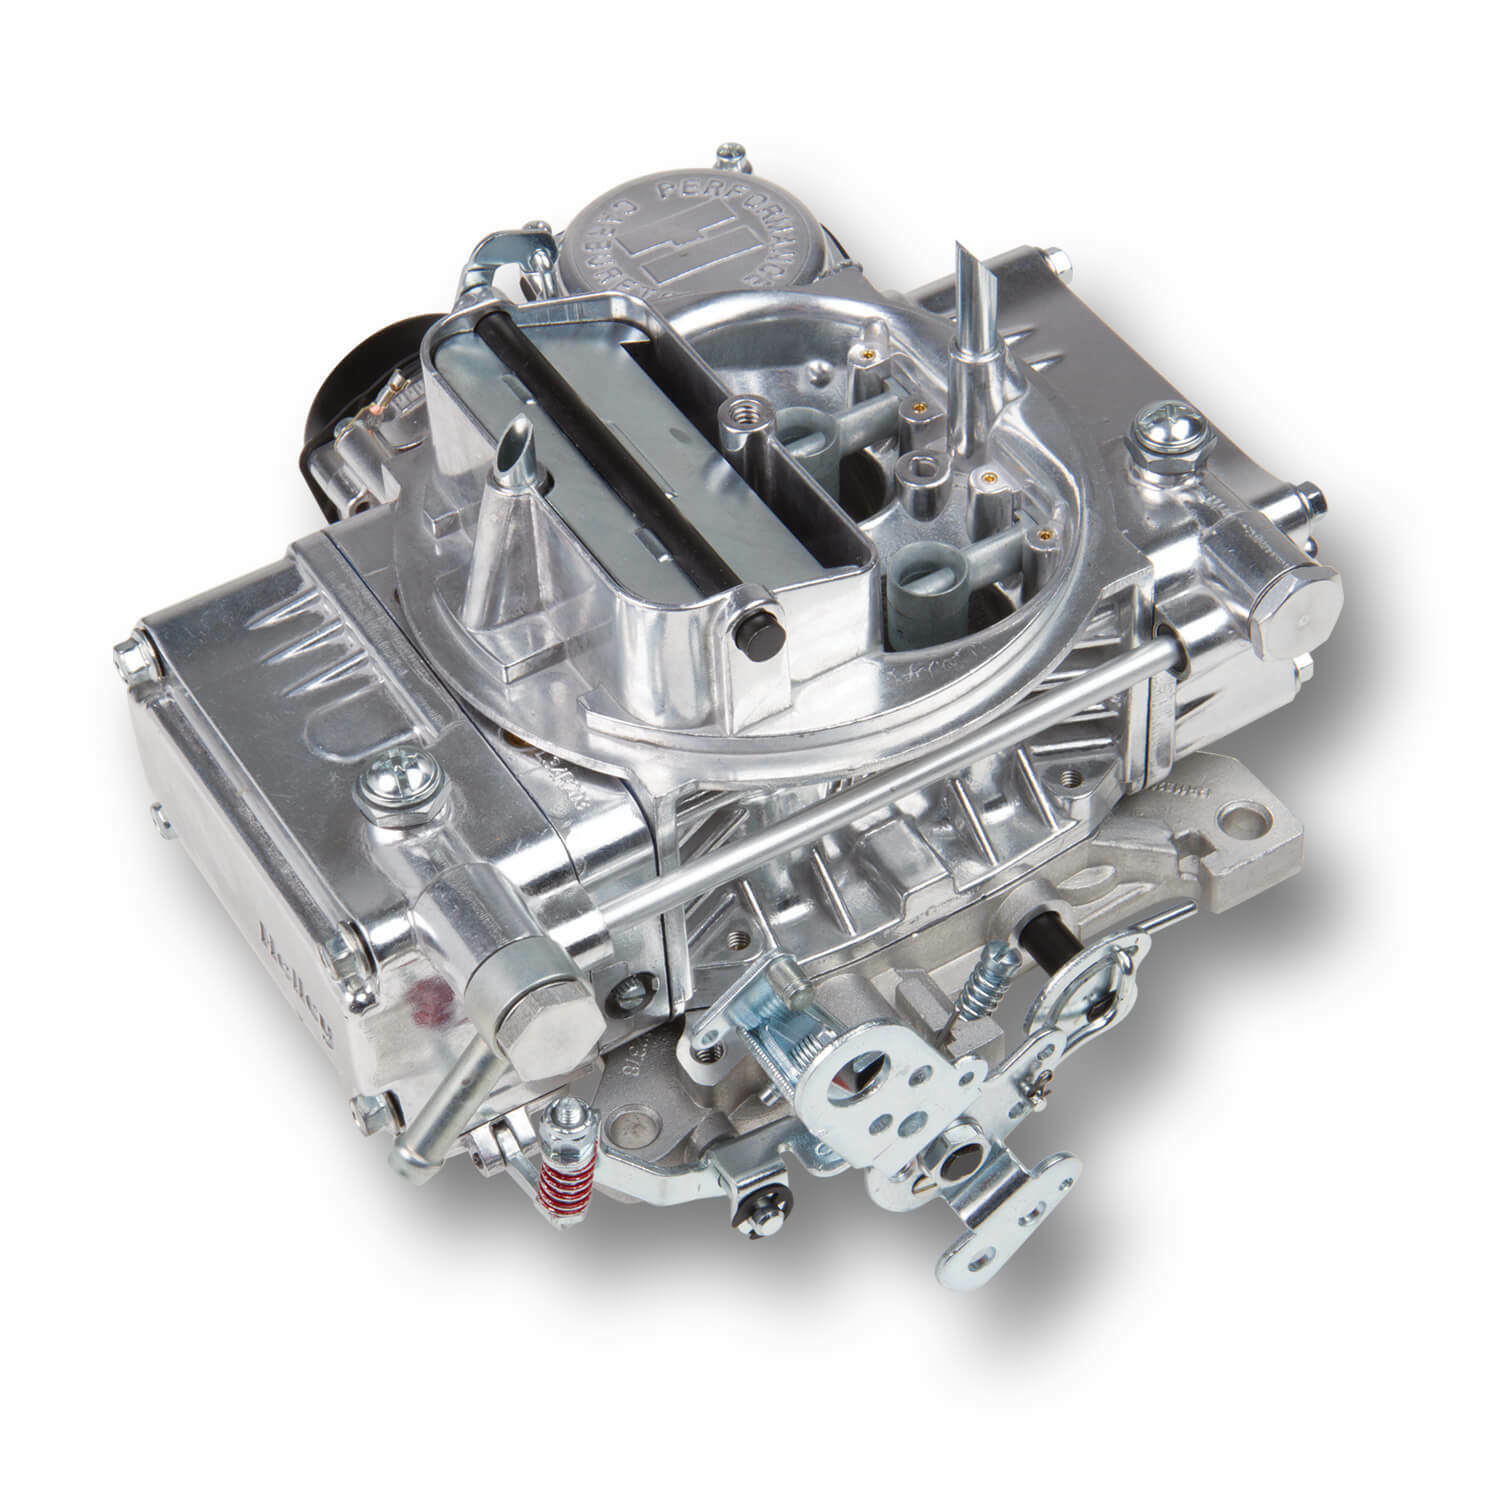 Holley 600 CFM Classic Carburetor W/ Electric Choke Vacuum For GM Ford Chrysler 